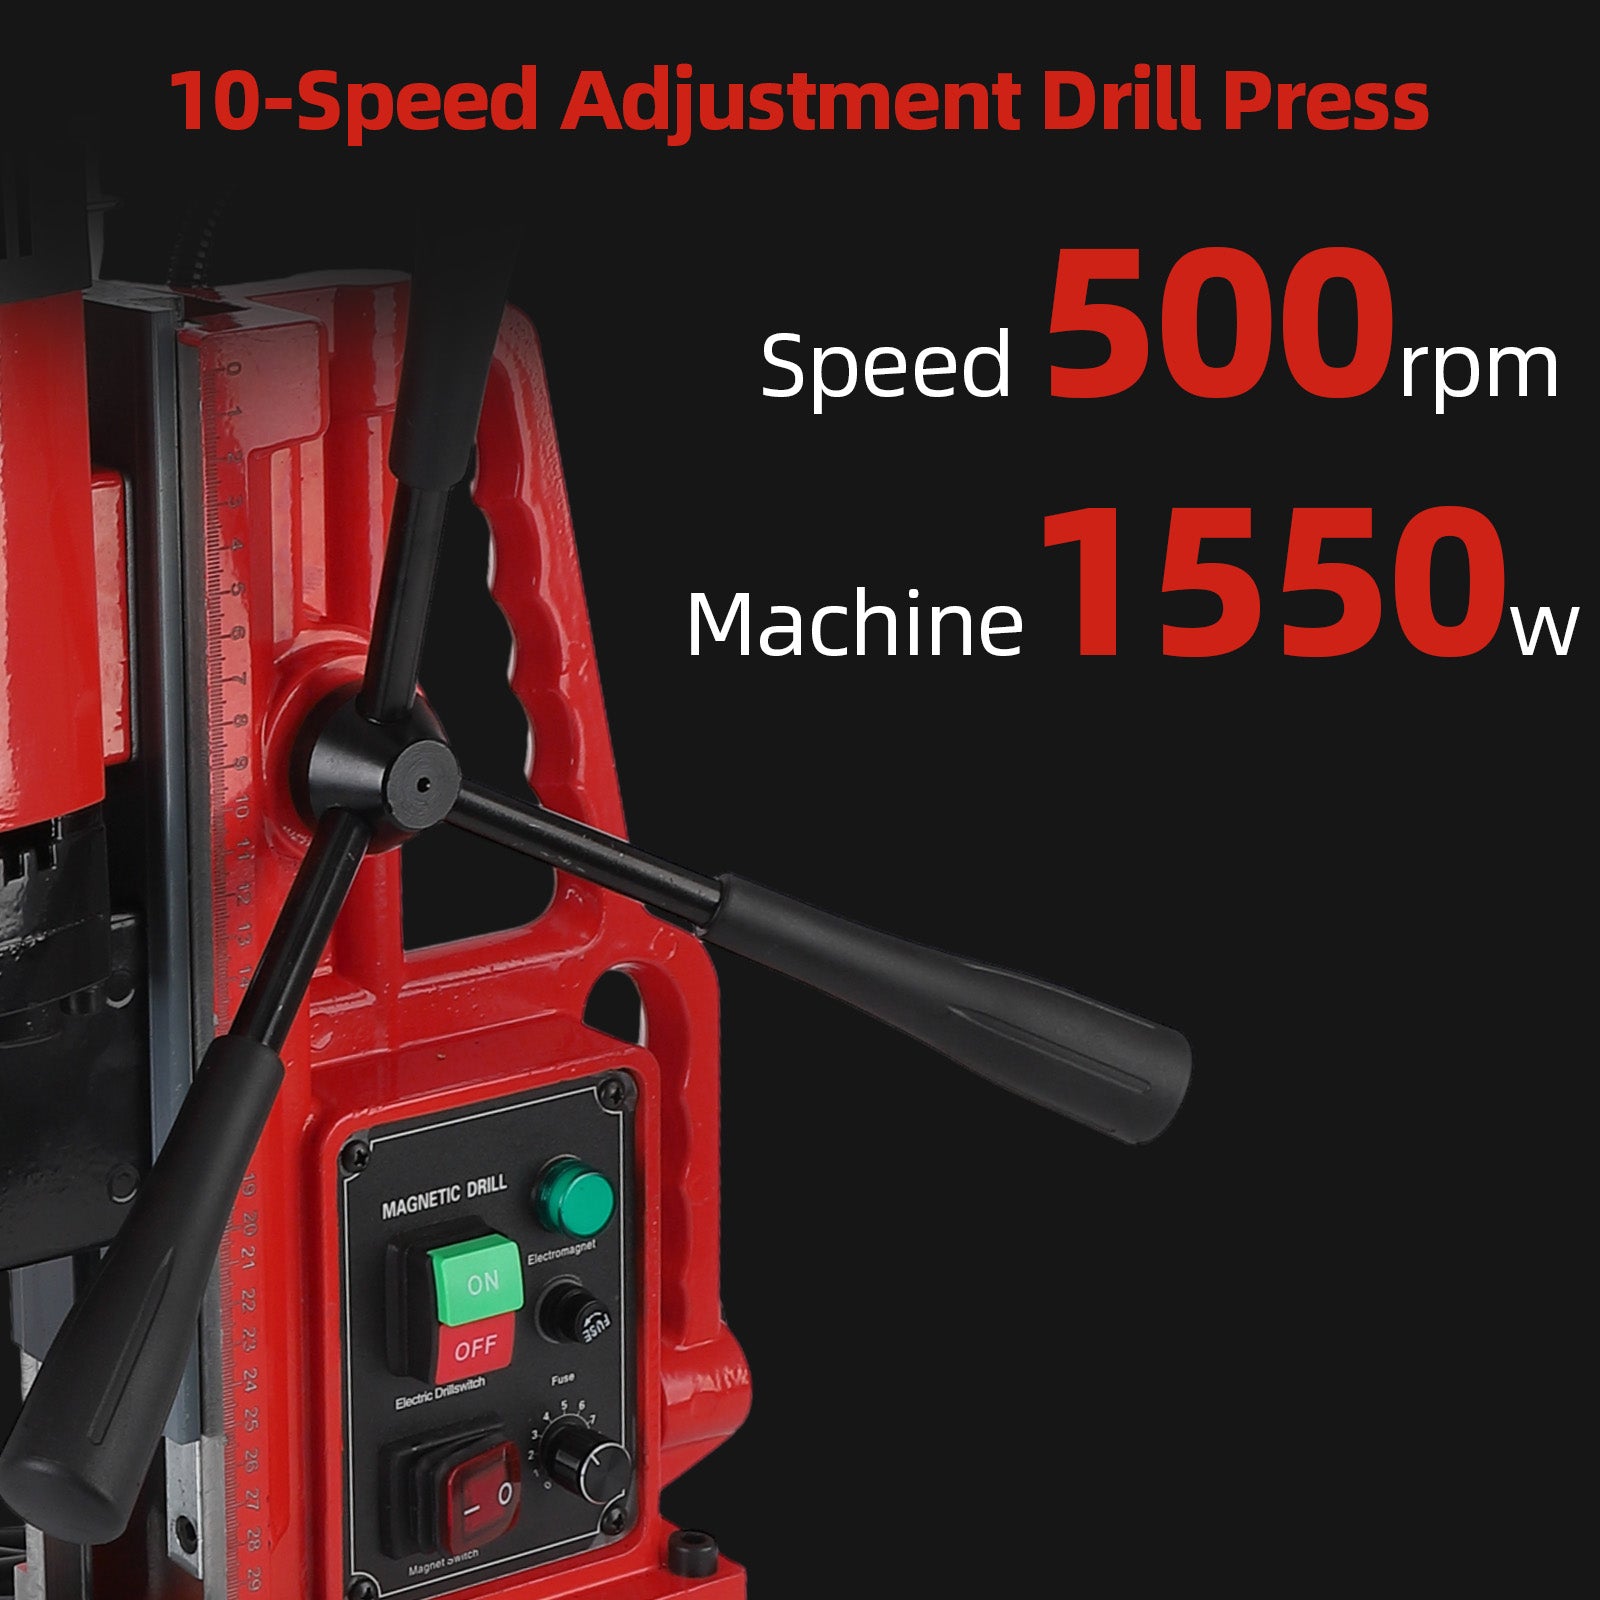 Magnetic Drill Press, 10-Speed, Metal Work